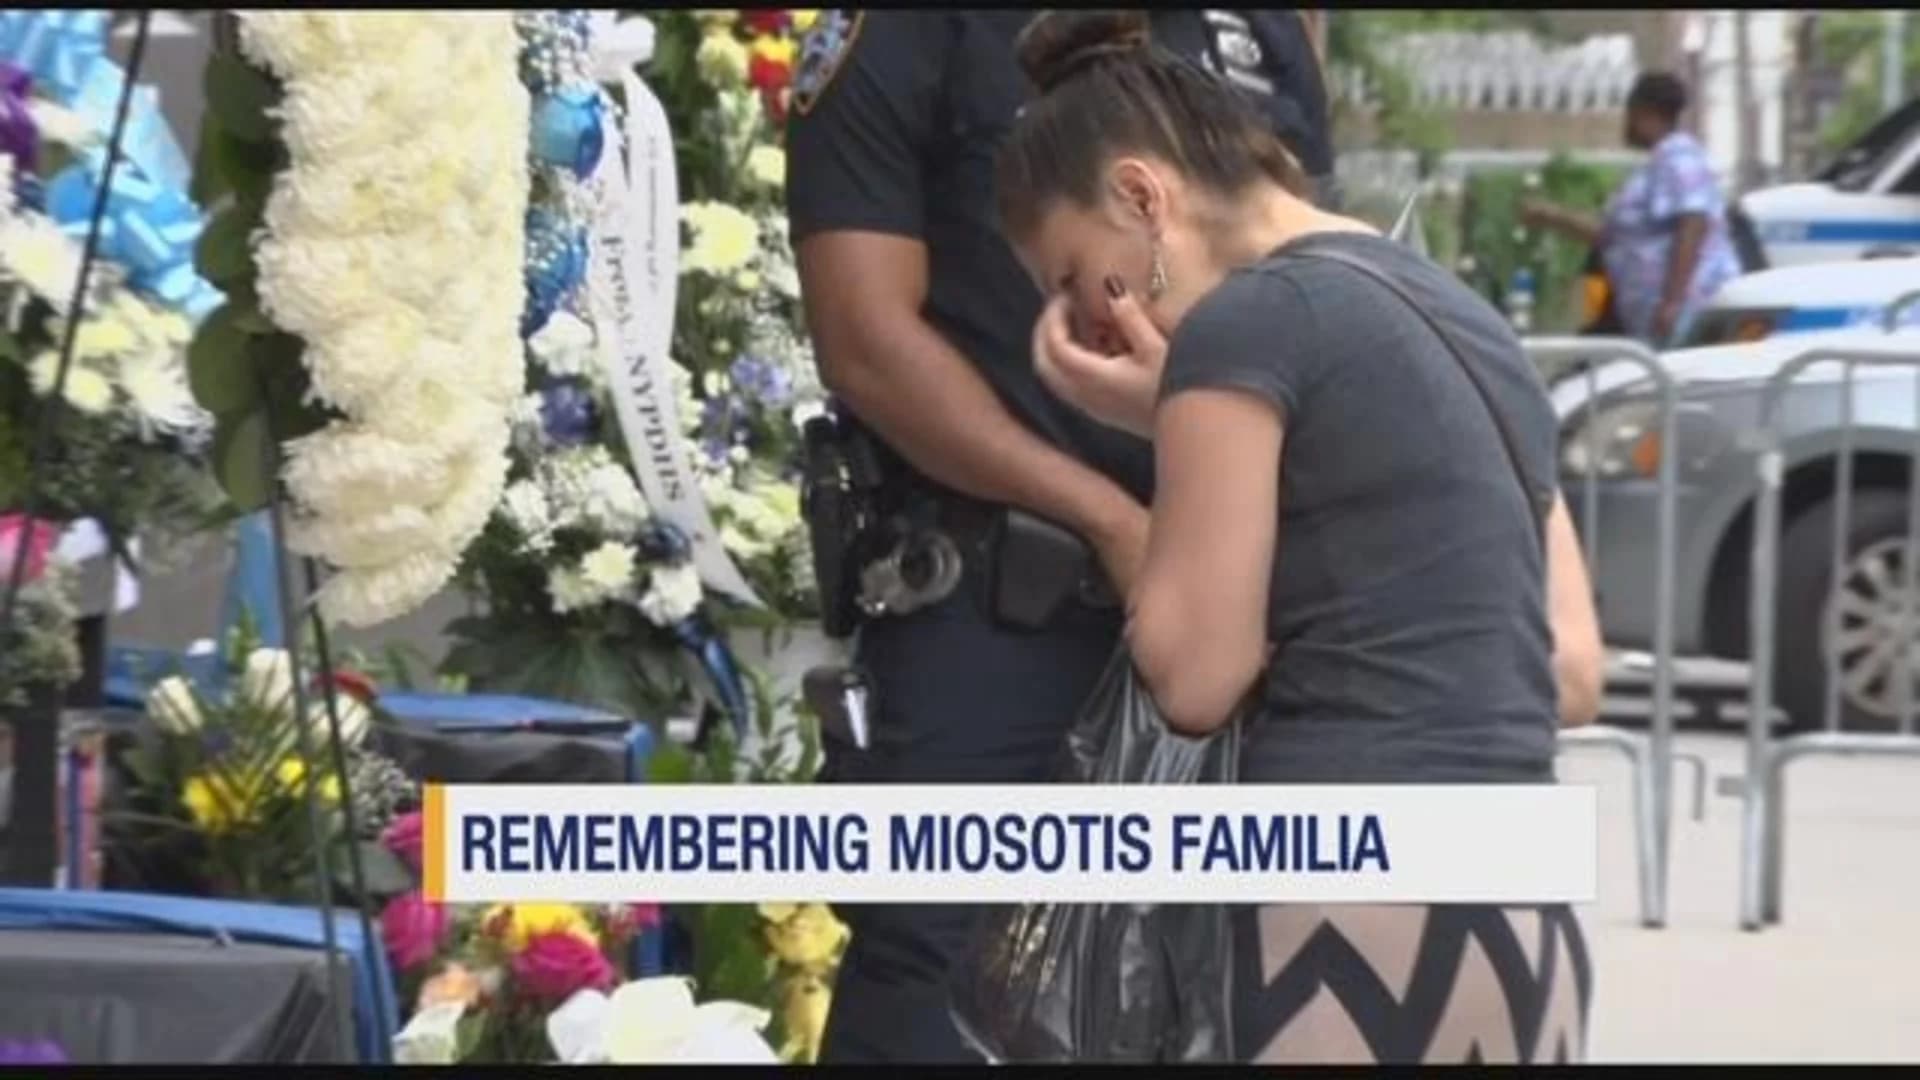 46th Precinct mourns loss of slain officer